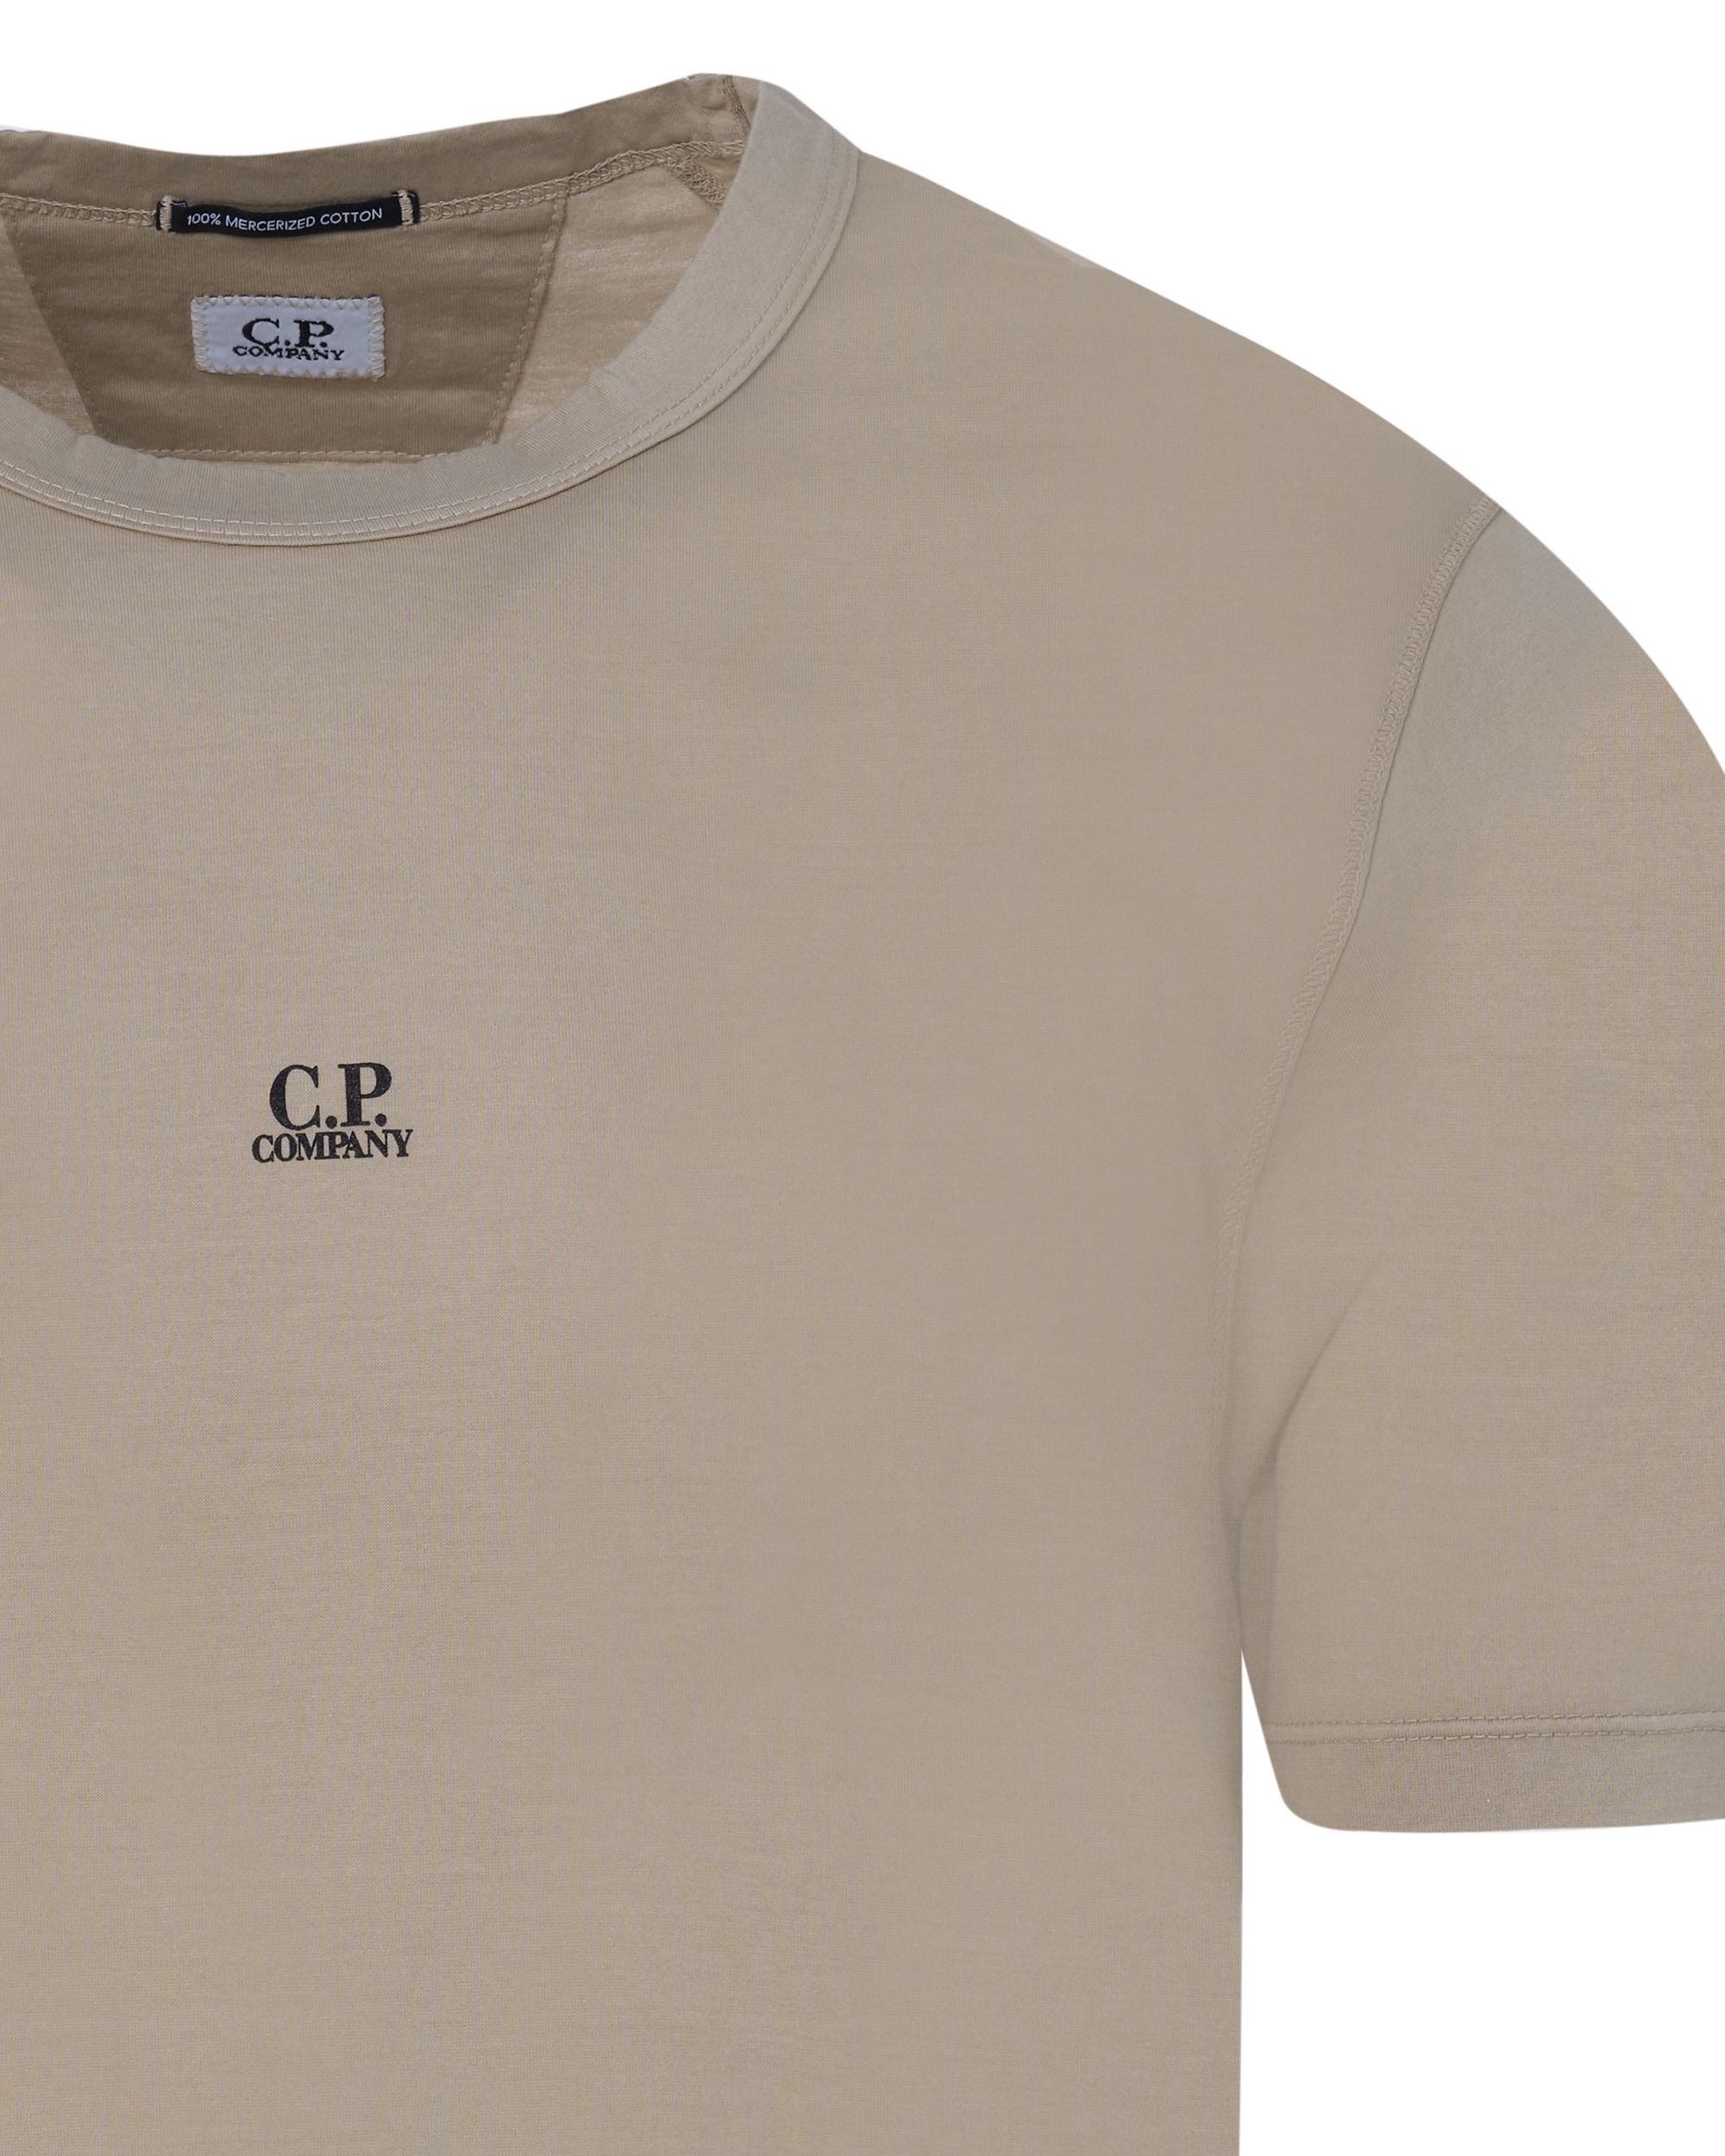 C.P Company T-shirt KM Beige 082472-001-L